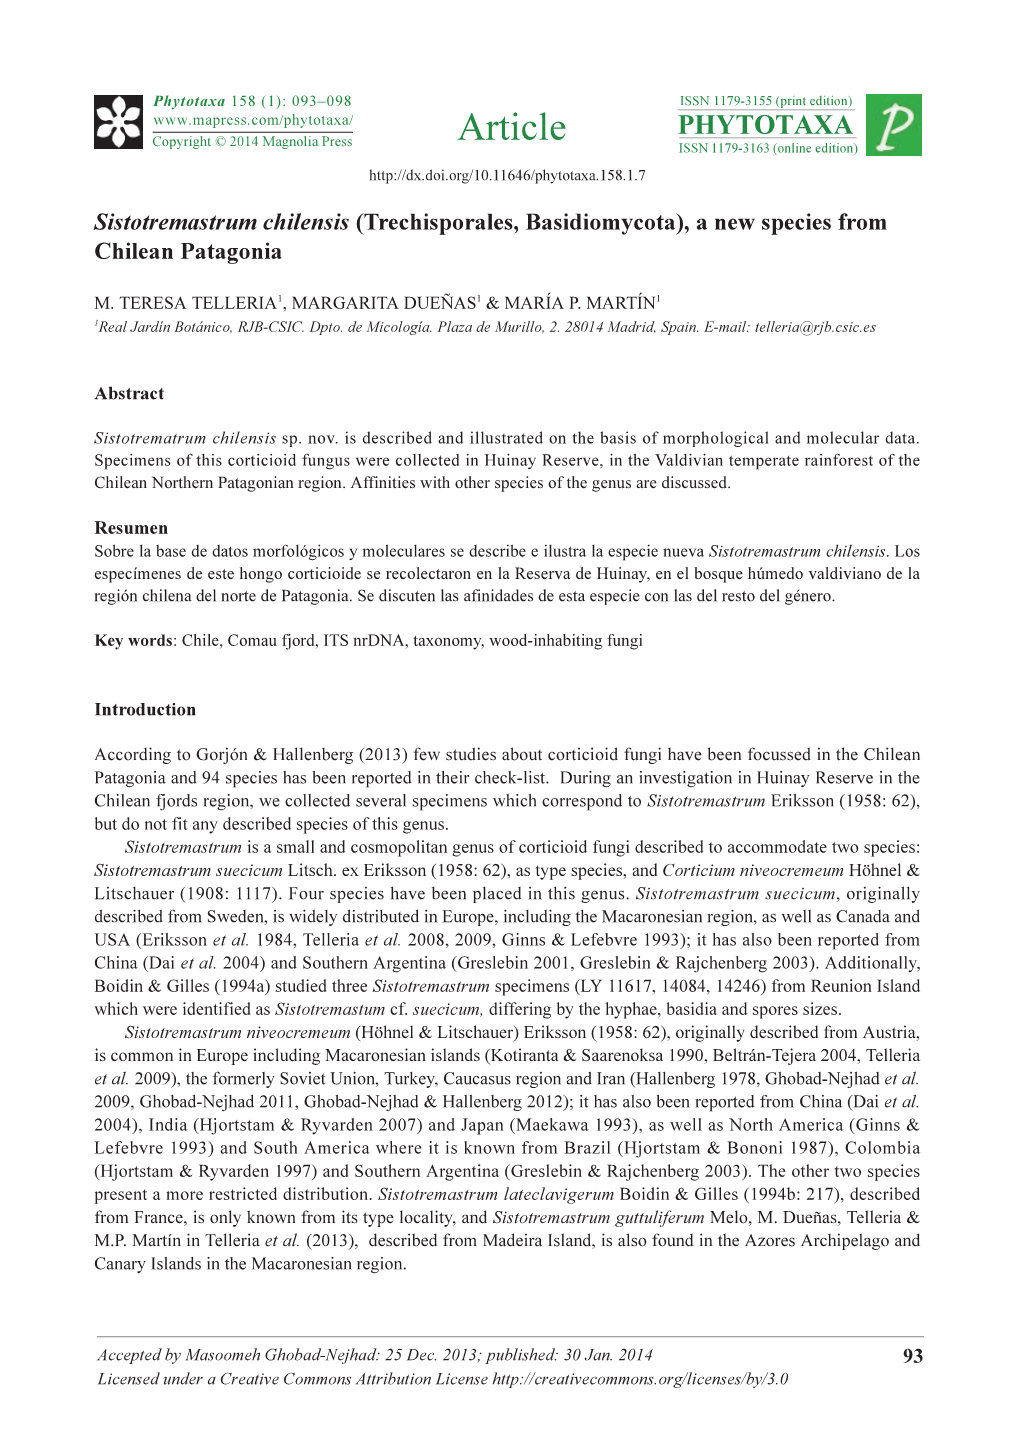 Sistotremastrum Chilensis (Trechisporales, Basidiomycota), a New Species from Chilean Patagonia